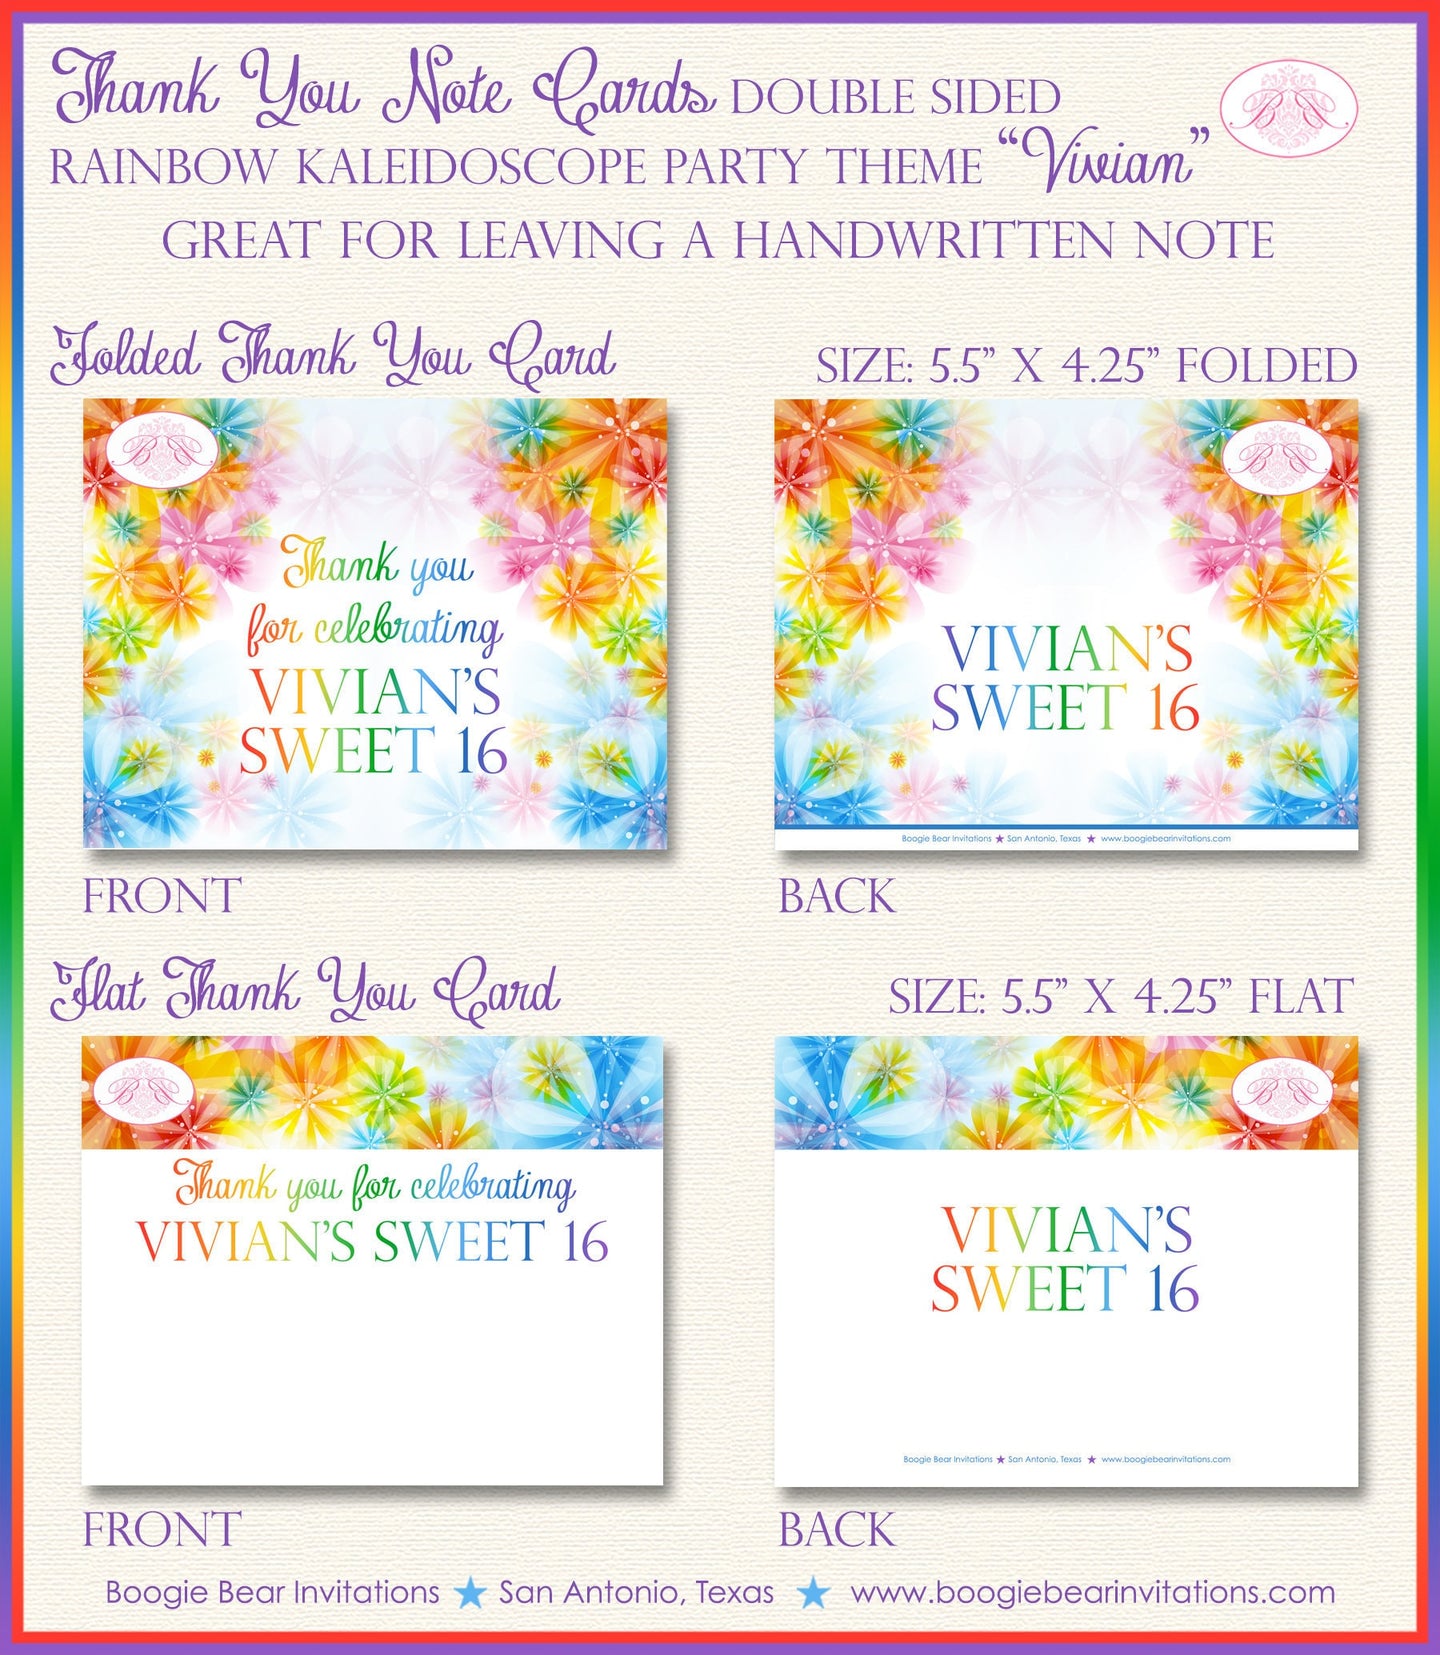 Rainbow Birthday Party Thank You Card Note Painting Girl Kaleidoscope Bokeh Flower Boogie Bear Invitations Vivian Theme Printed